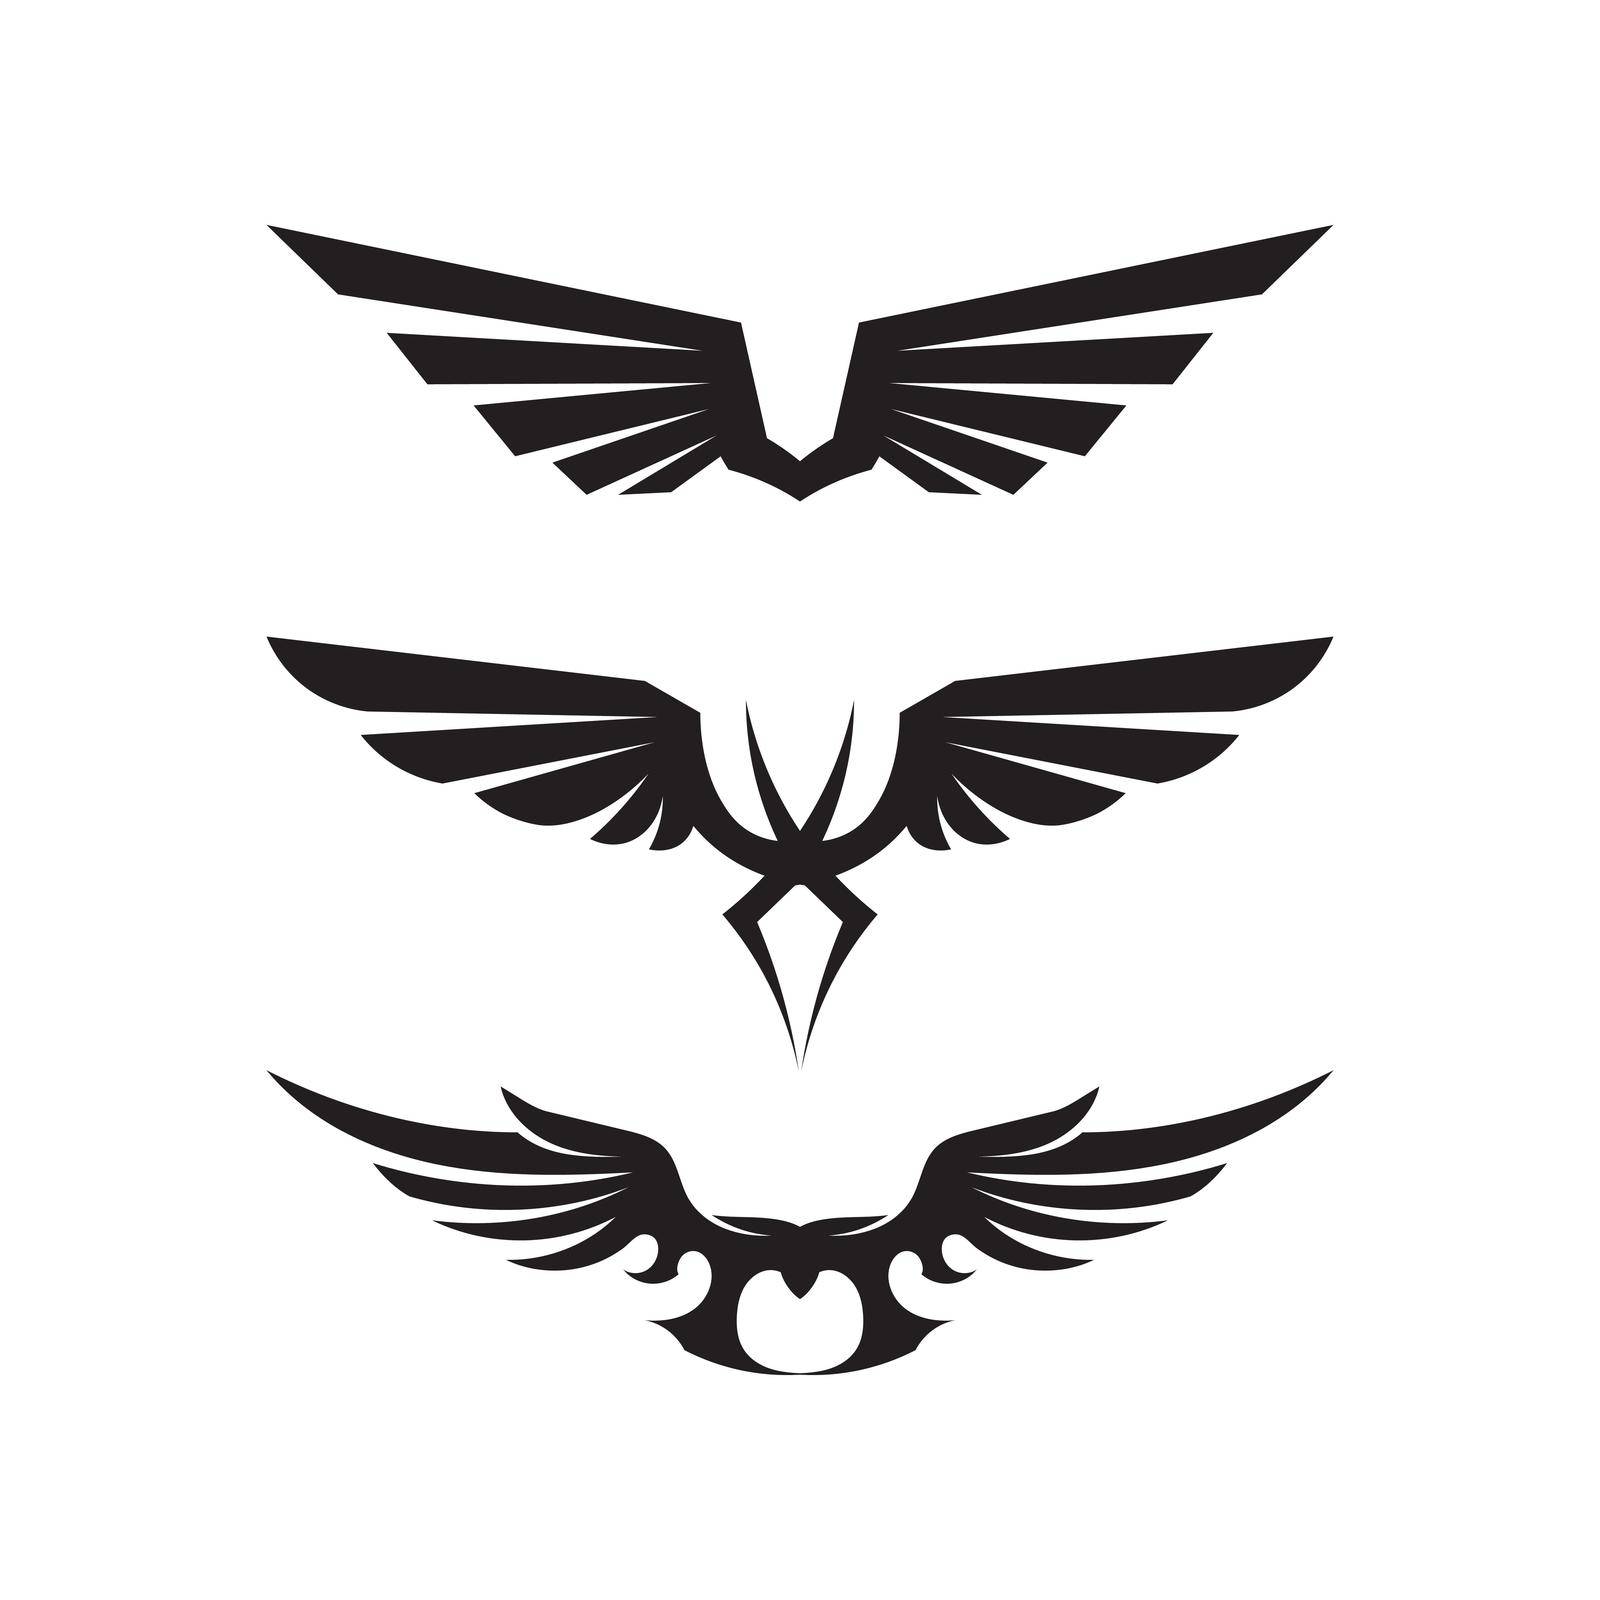 Black wing logo symbol for a professional designer by Anggasaputro